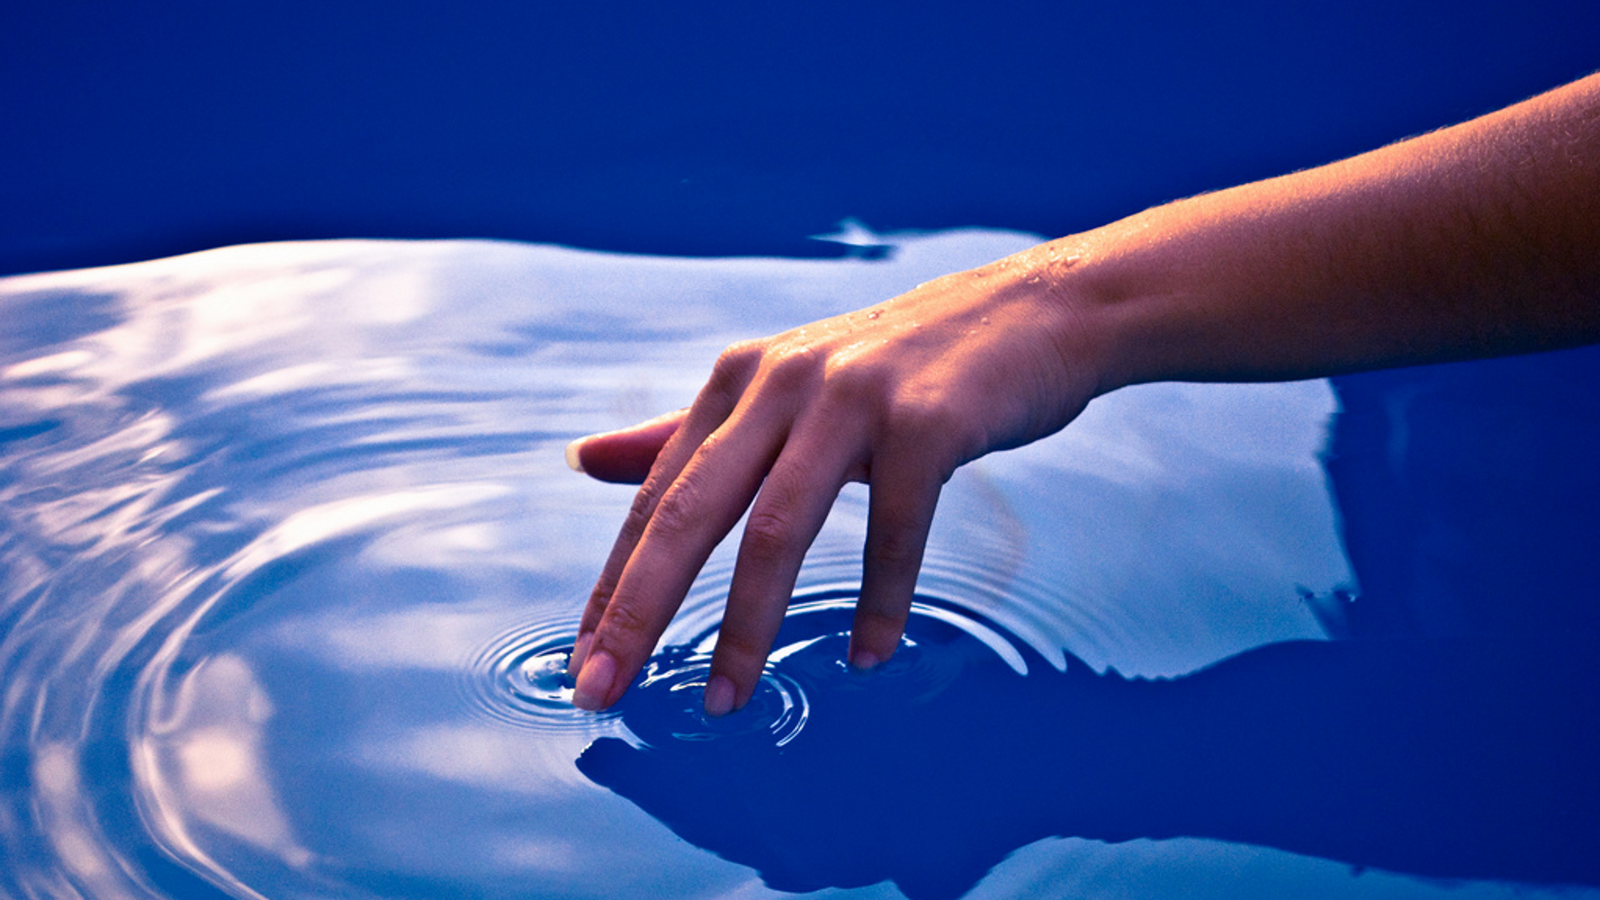 hand-touching-water-hd.png (1